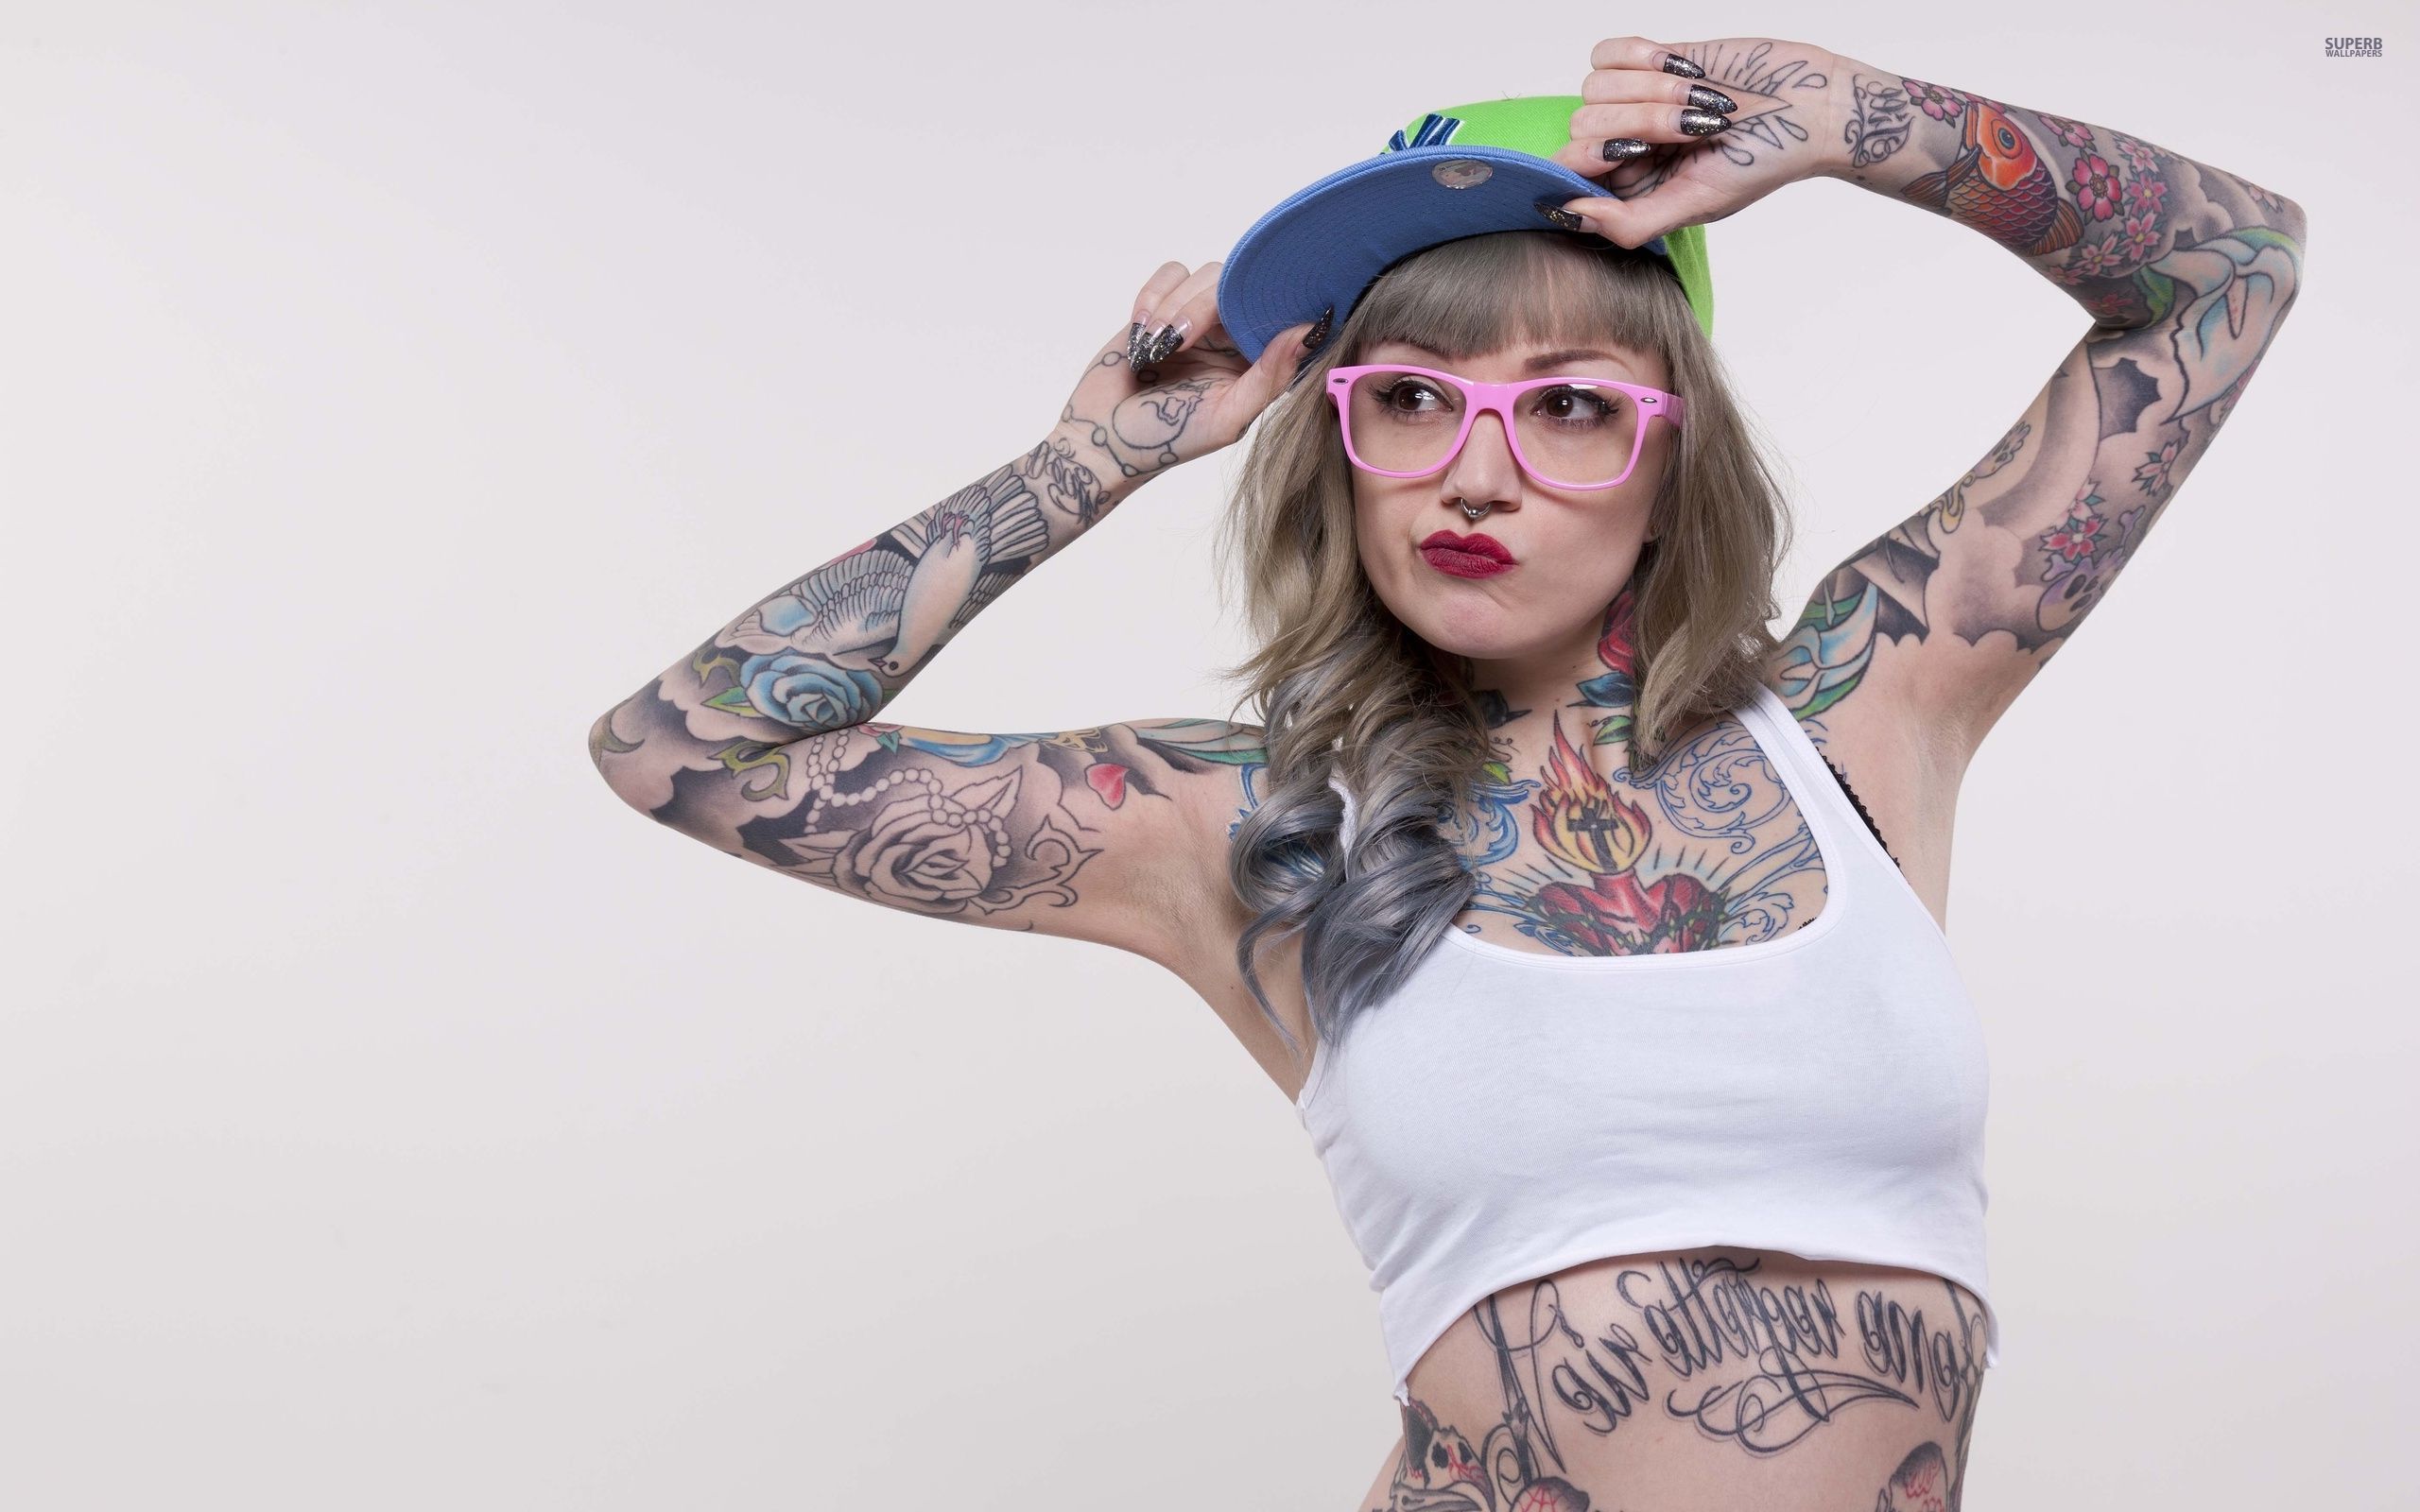 Tattooed girl : Desktop and mobile wallpaper : Wallippo